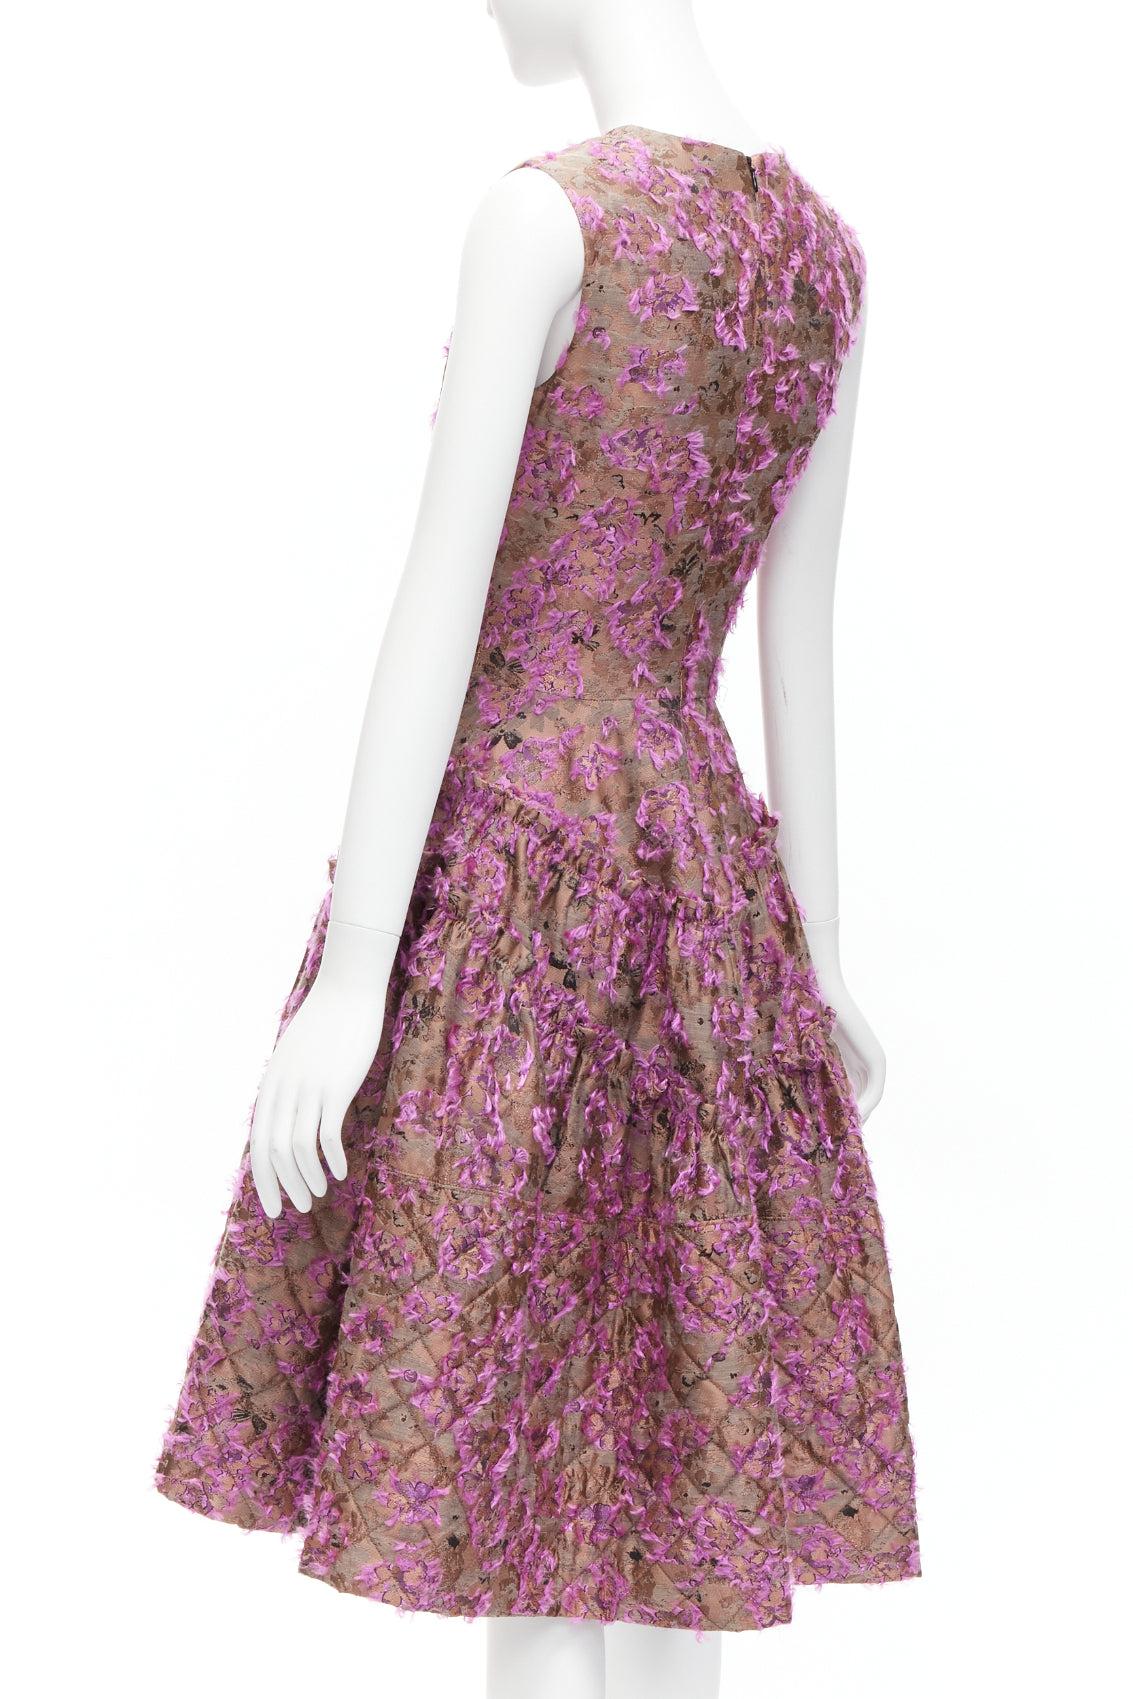 ANAIS JOURDEN brown floral cloque jacquard dropped waist flared dress FR38 M For Sale 2